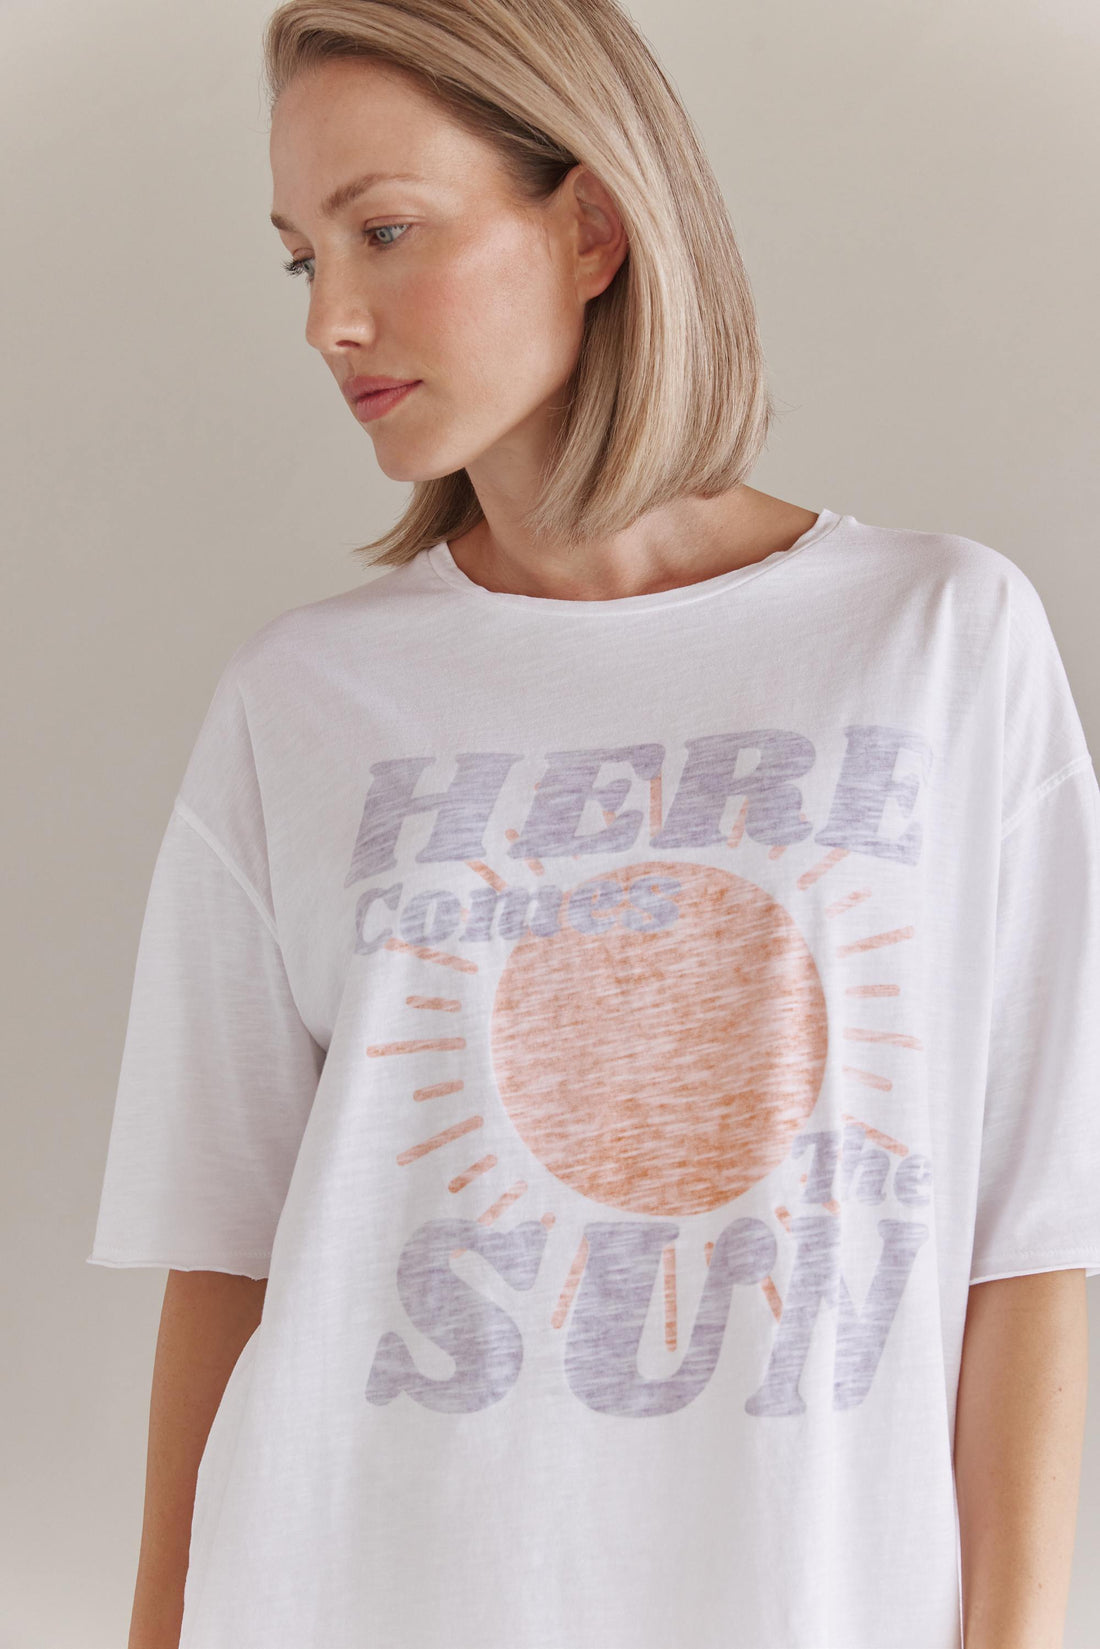 Gewaschenes Flamé T-Shirt Mit Here Comes The Sun Inside-Out Druck